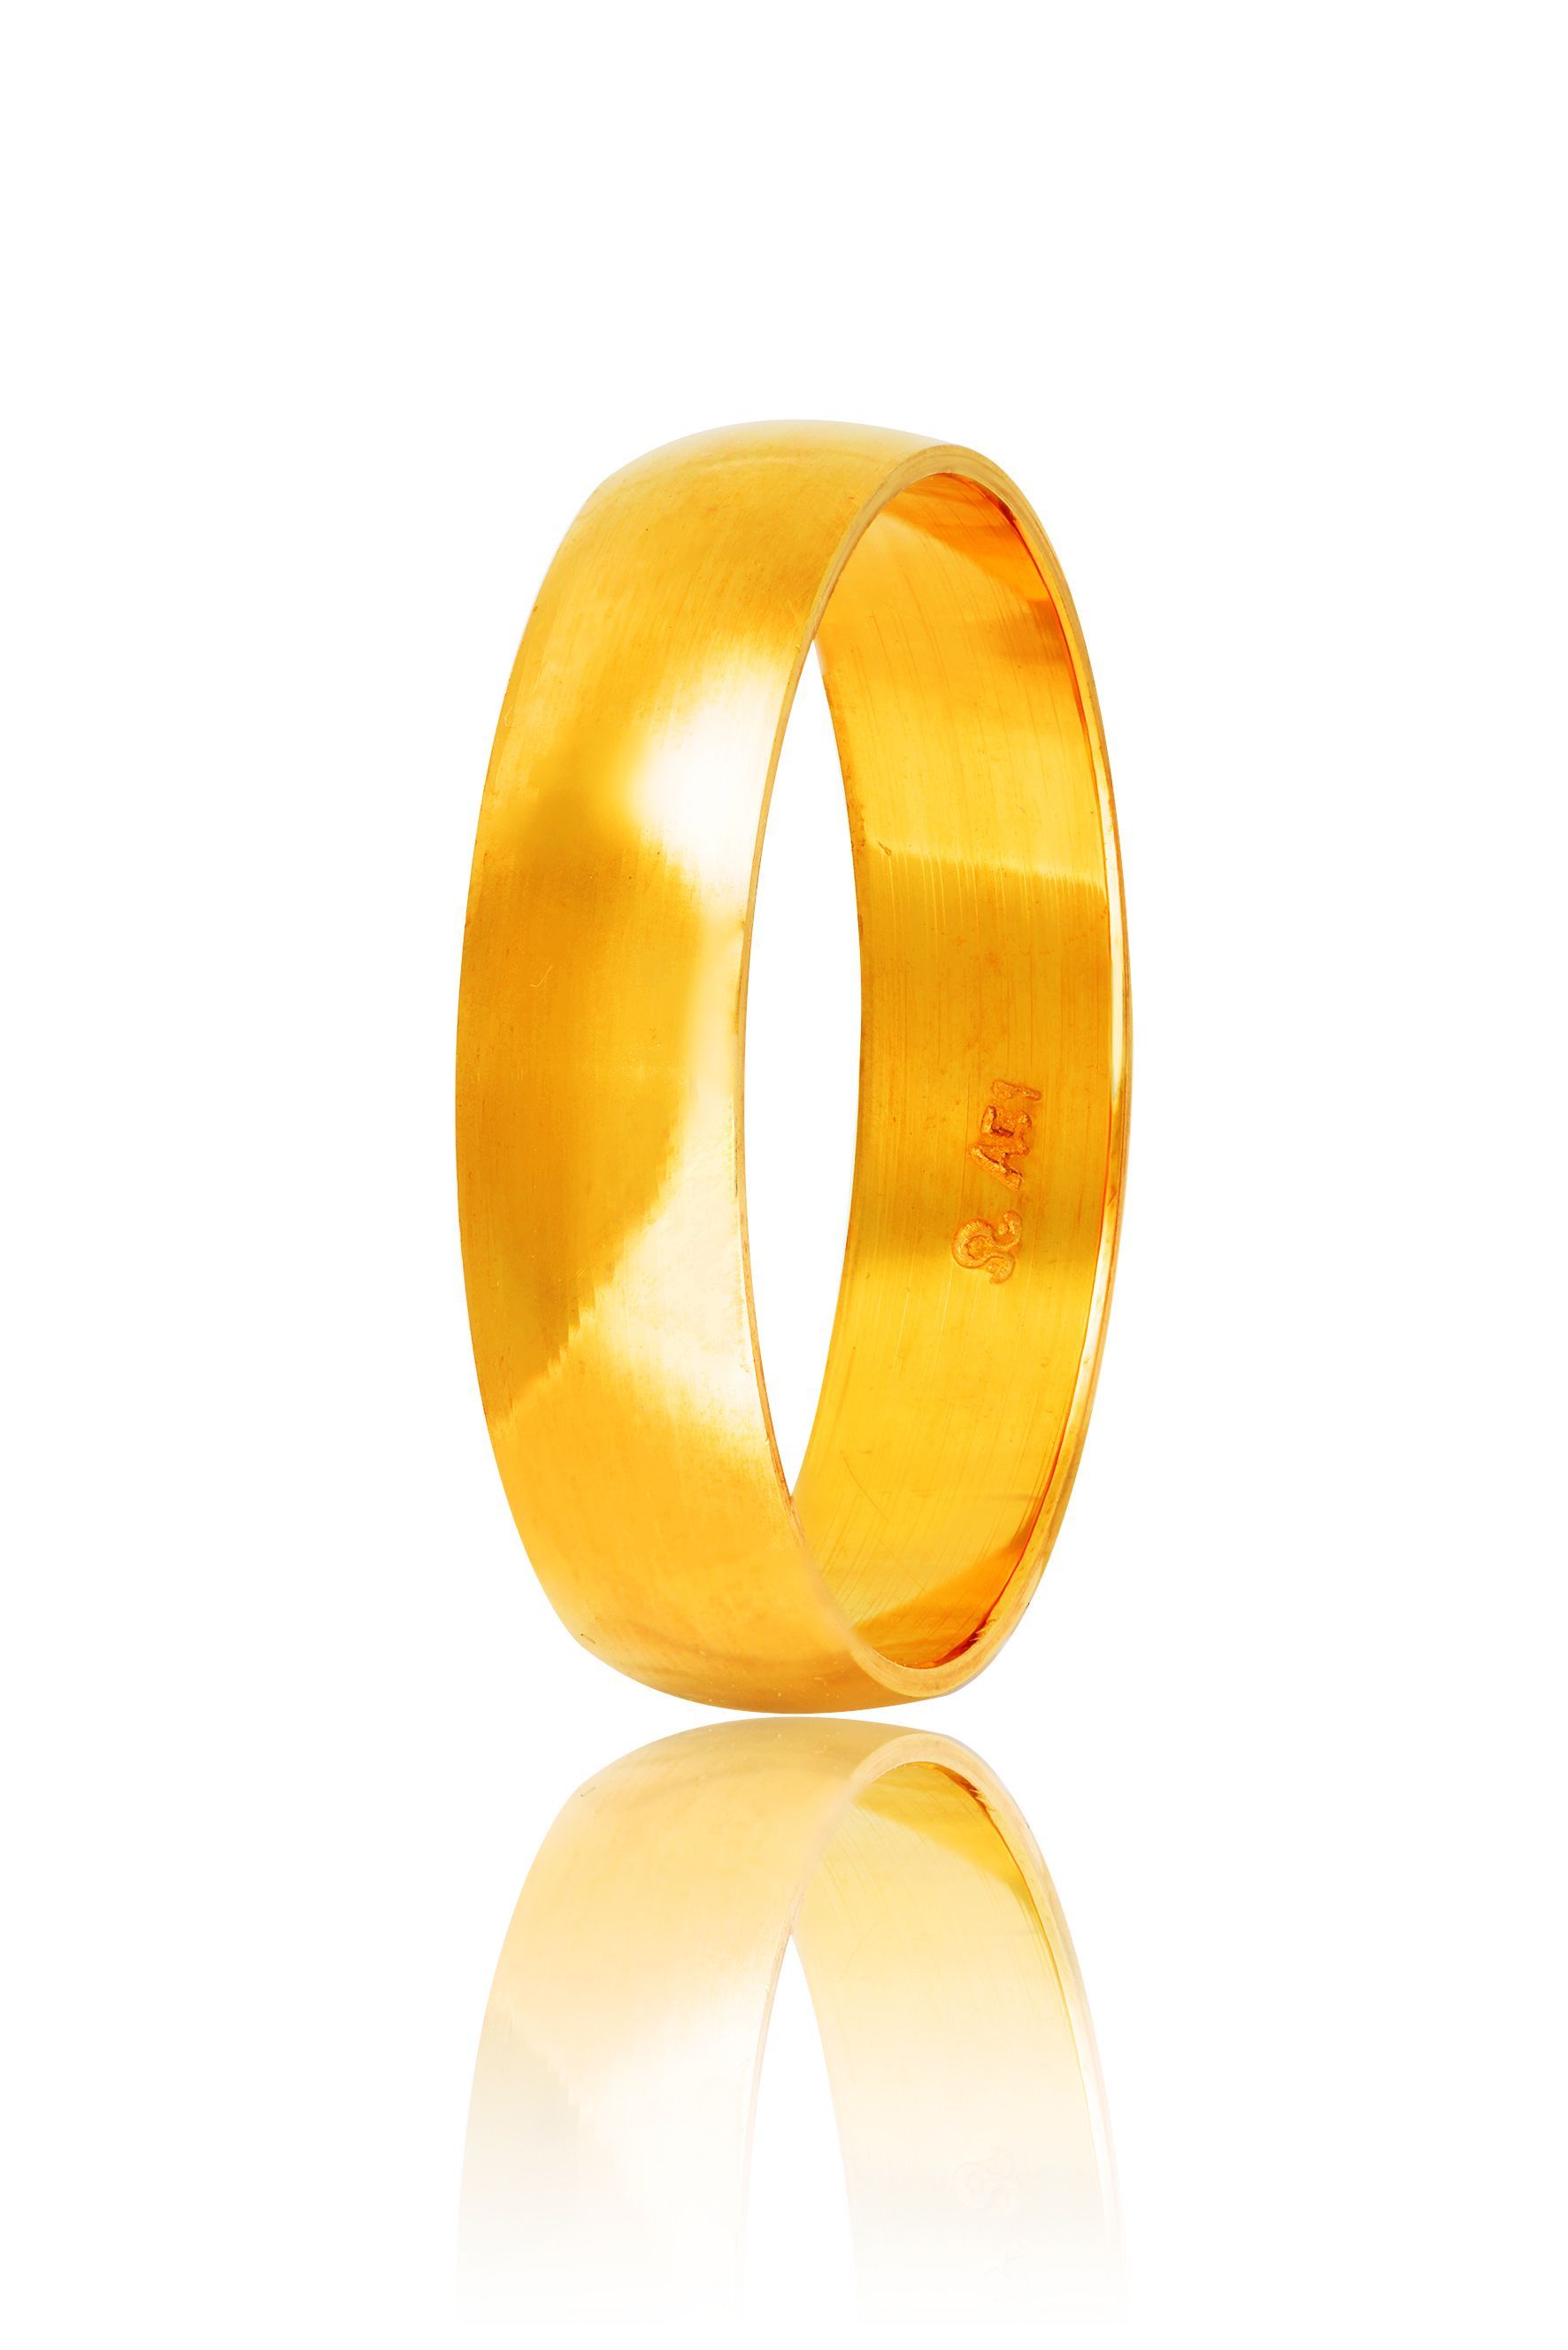 Golden wedding rings 5mm (code HR3Ay)